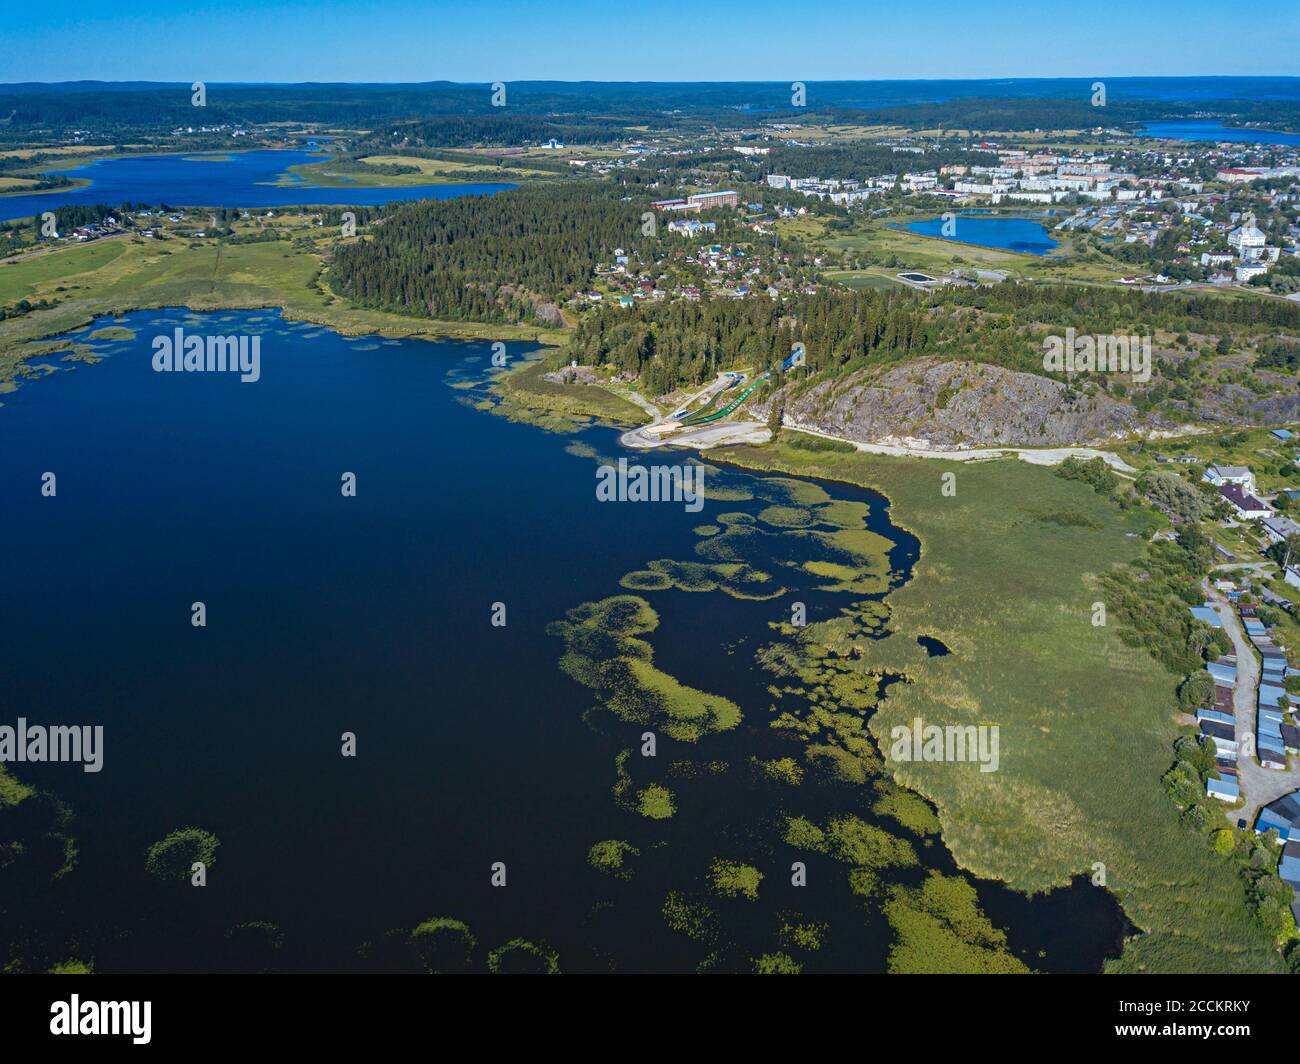 Lake Ayranne, Sortavala, Republic of Karelia, Russia Stock Photo